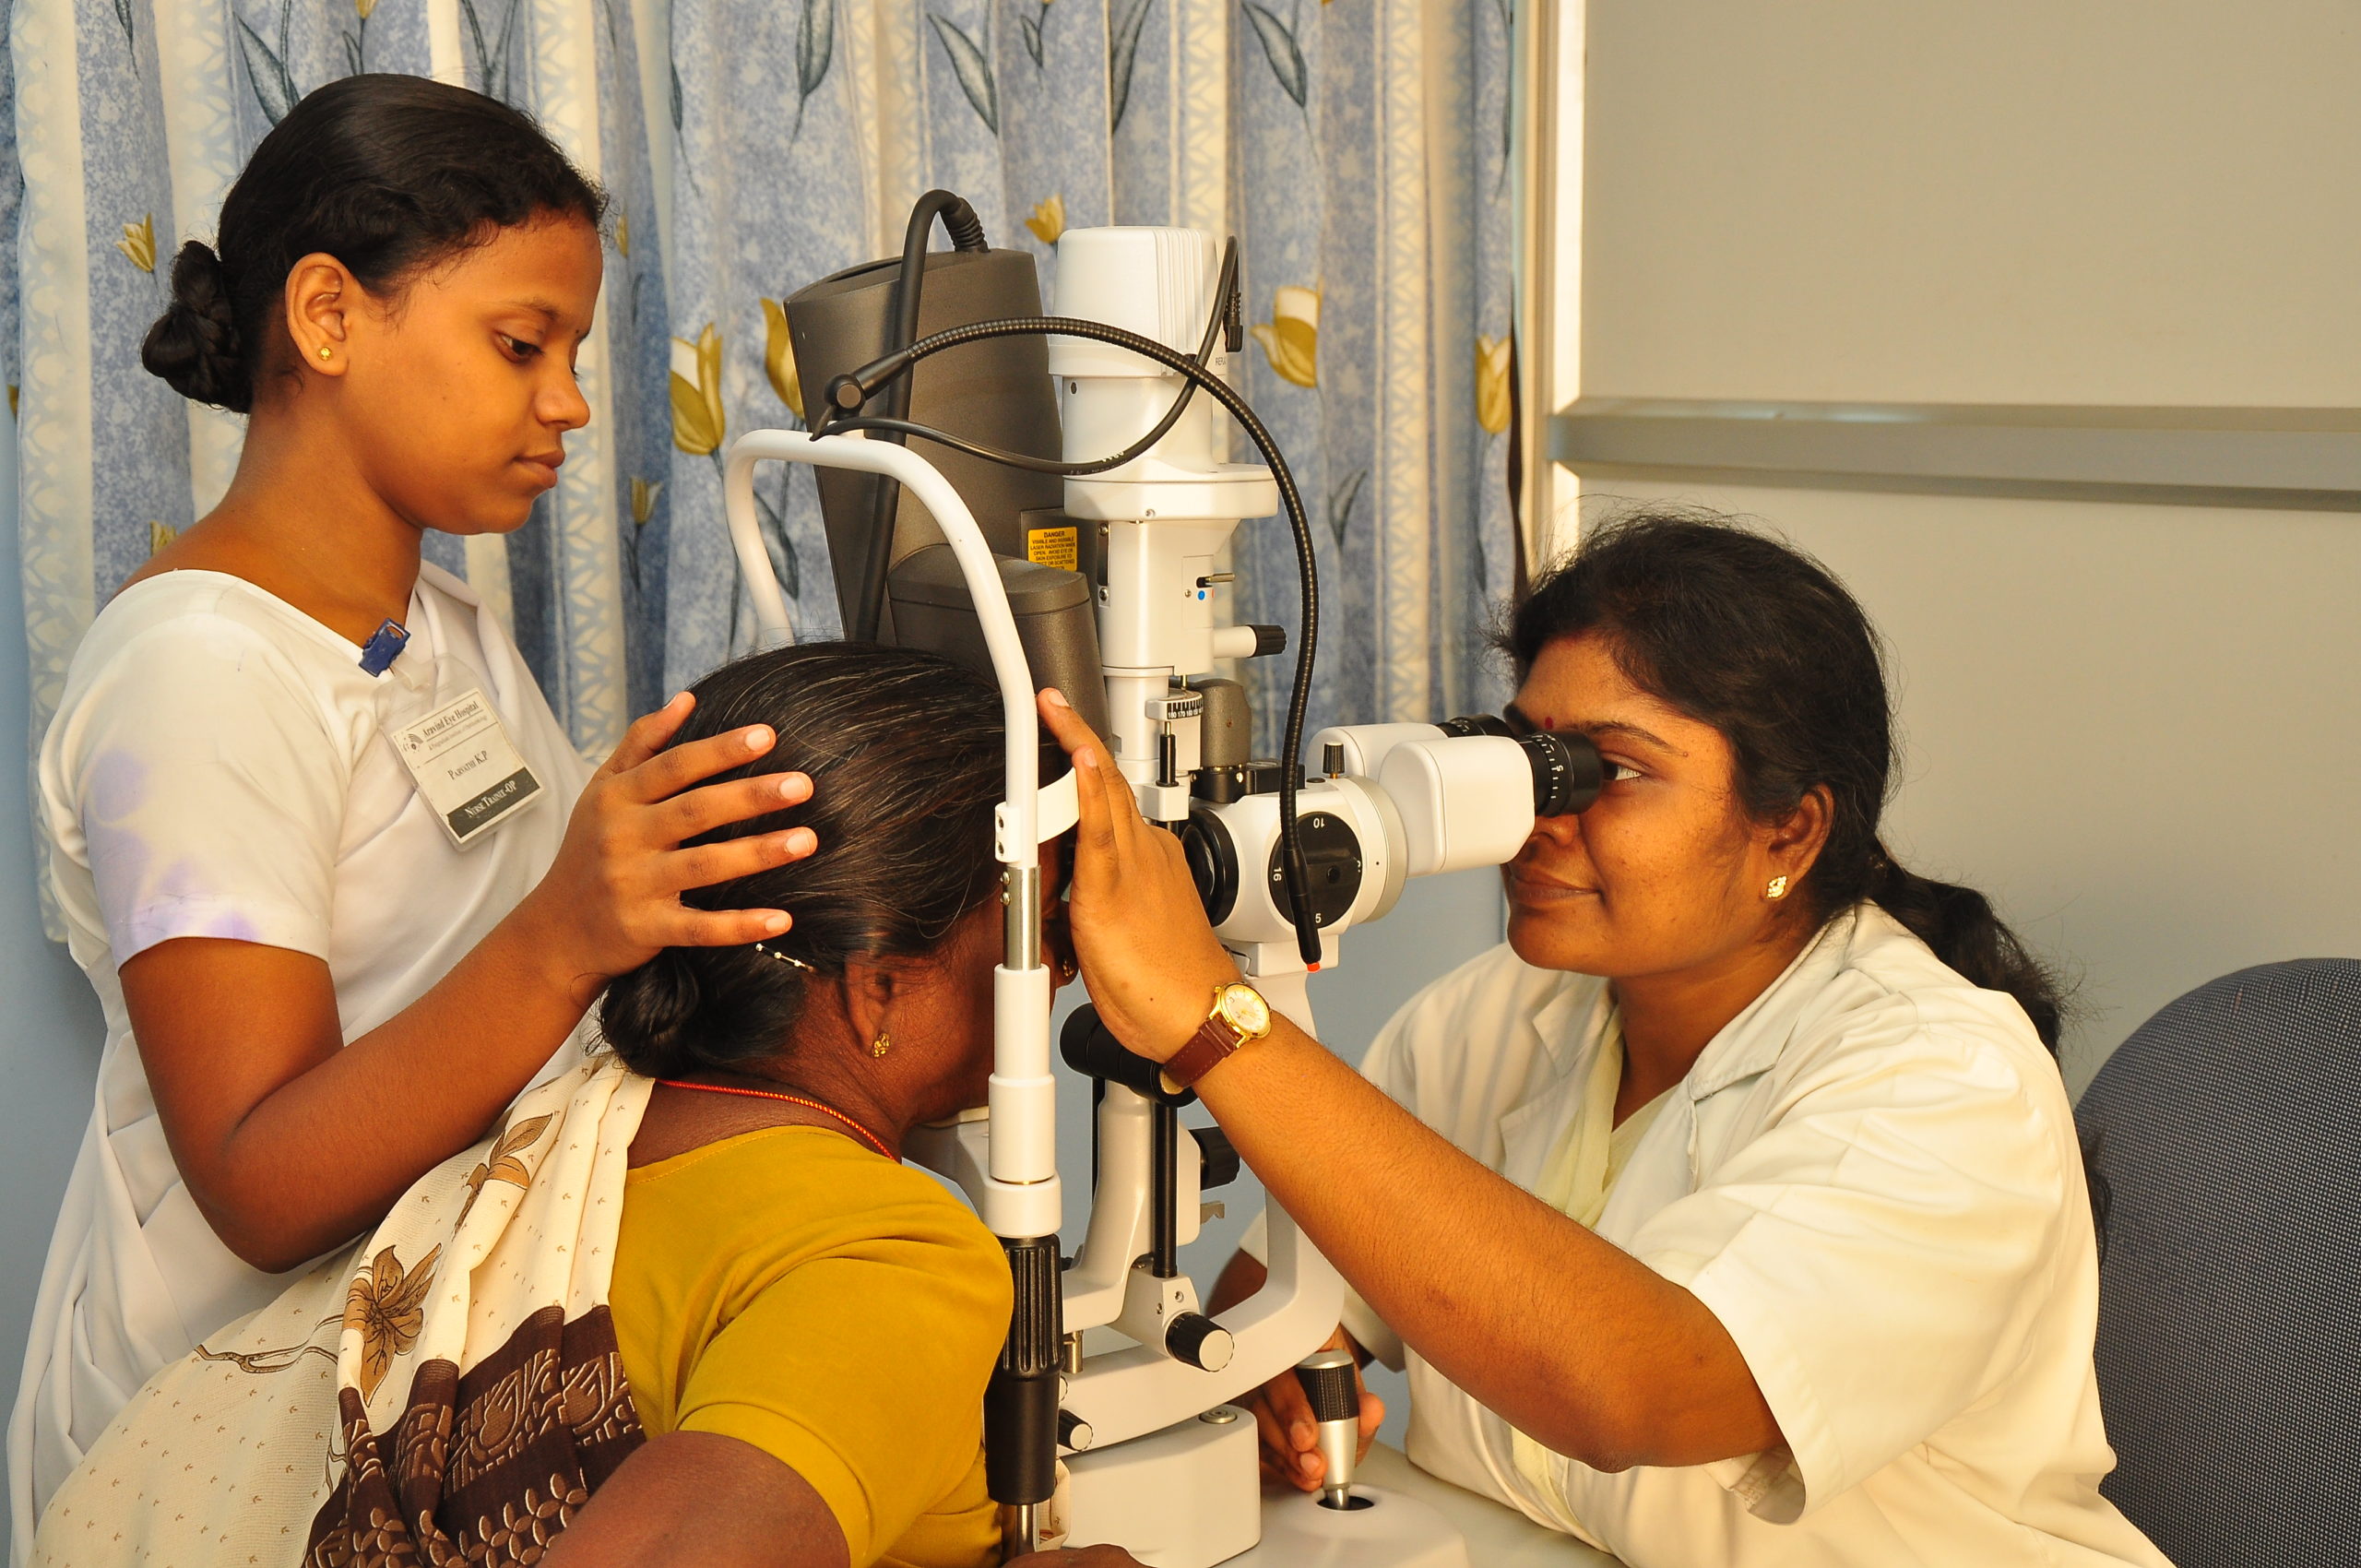 Patient examintaion_Rajkumar_Aravind Pondicherry. Photo Credit: ARAVIND EYE CARE SYSTEM